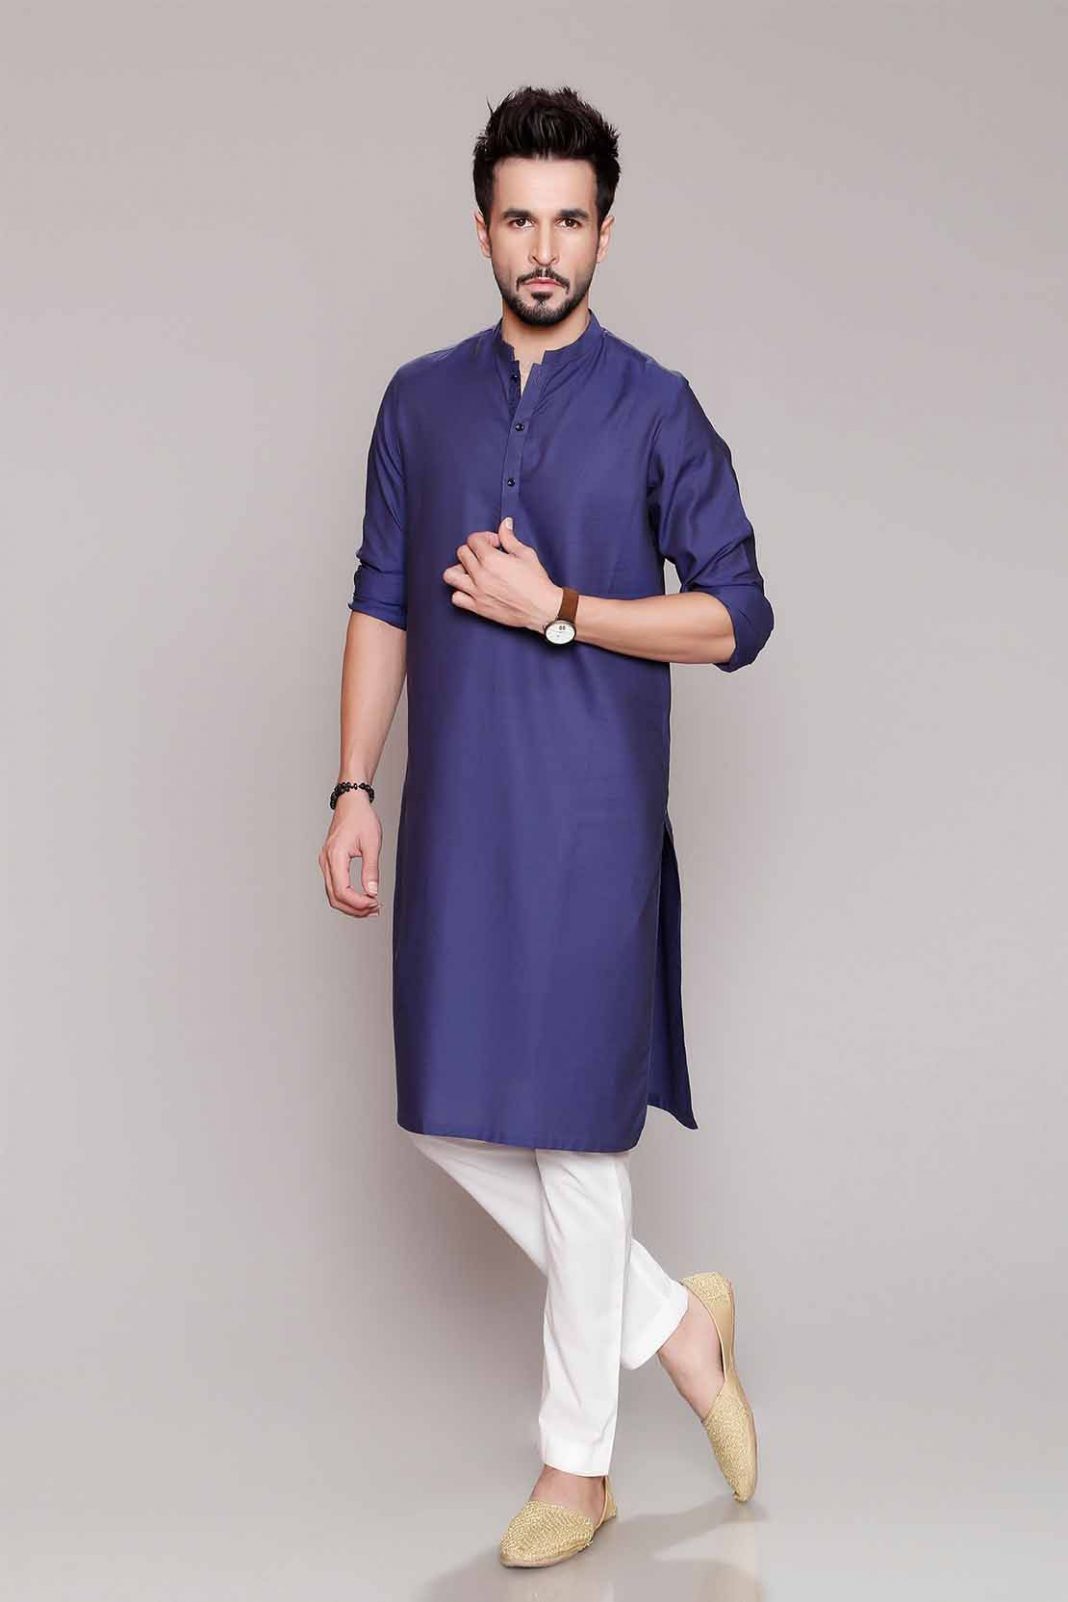 Trending Style Kurta and Pajamas for Men in India!